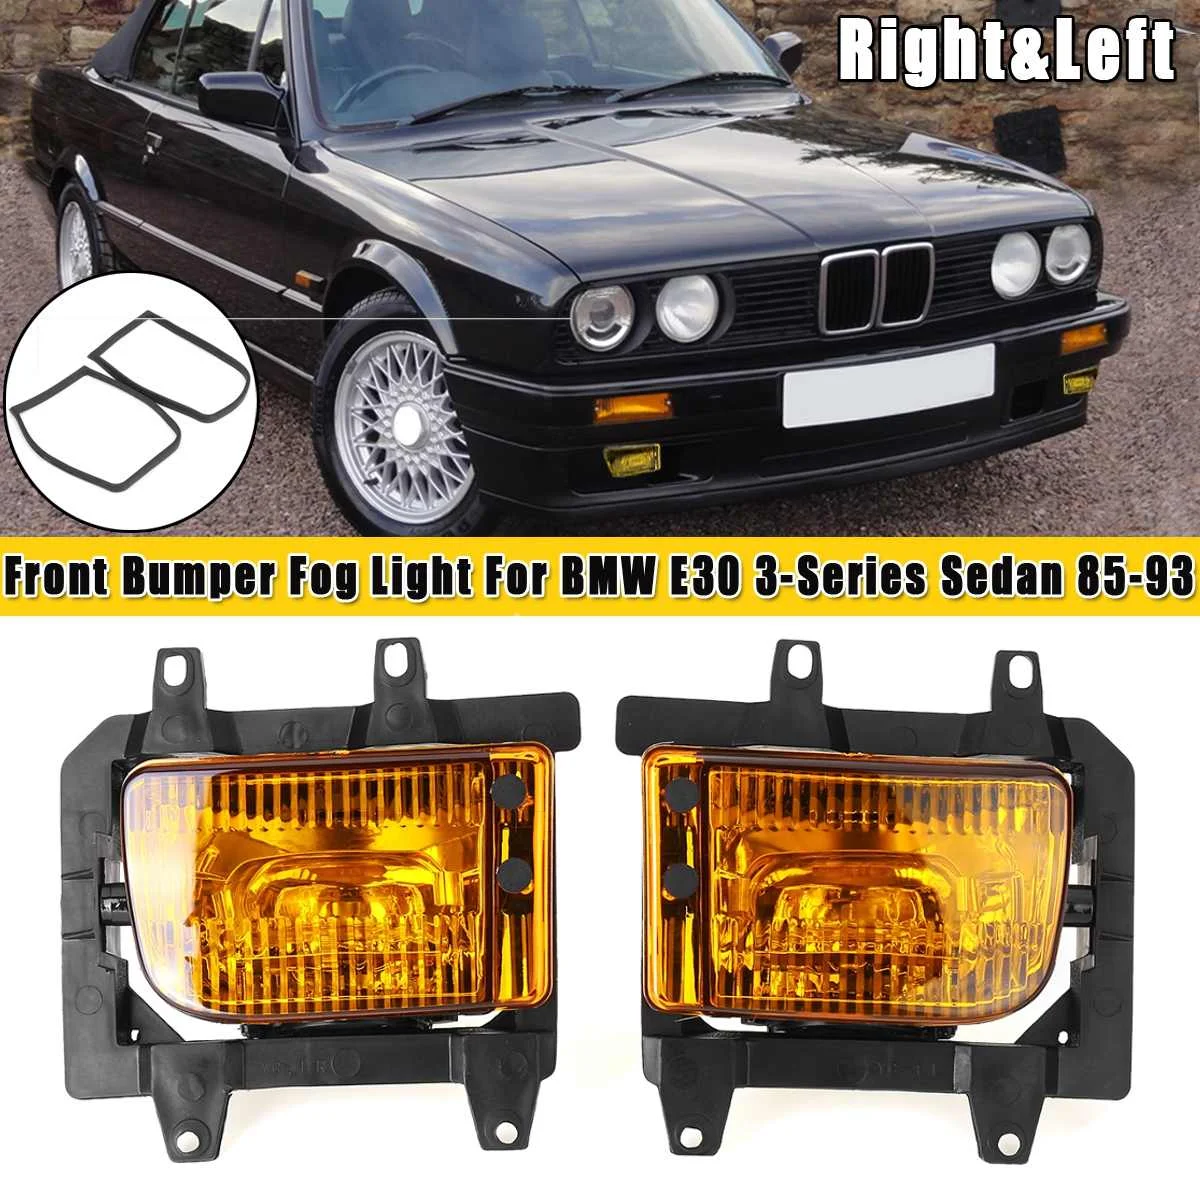 

2pcs Front Bumper Fog Lights Fog Lamps Car Light Assembly for MW E30 3-Series 318i 325i 1985-1993 Car Styling